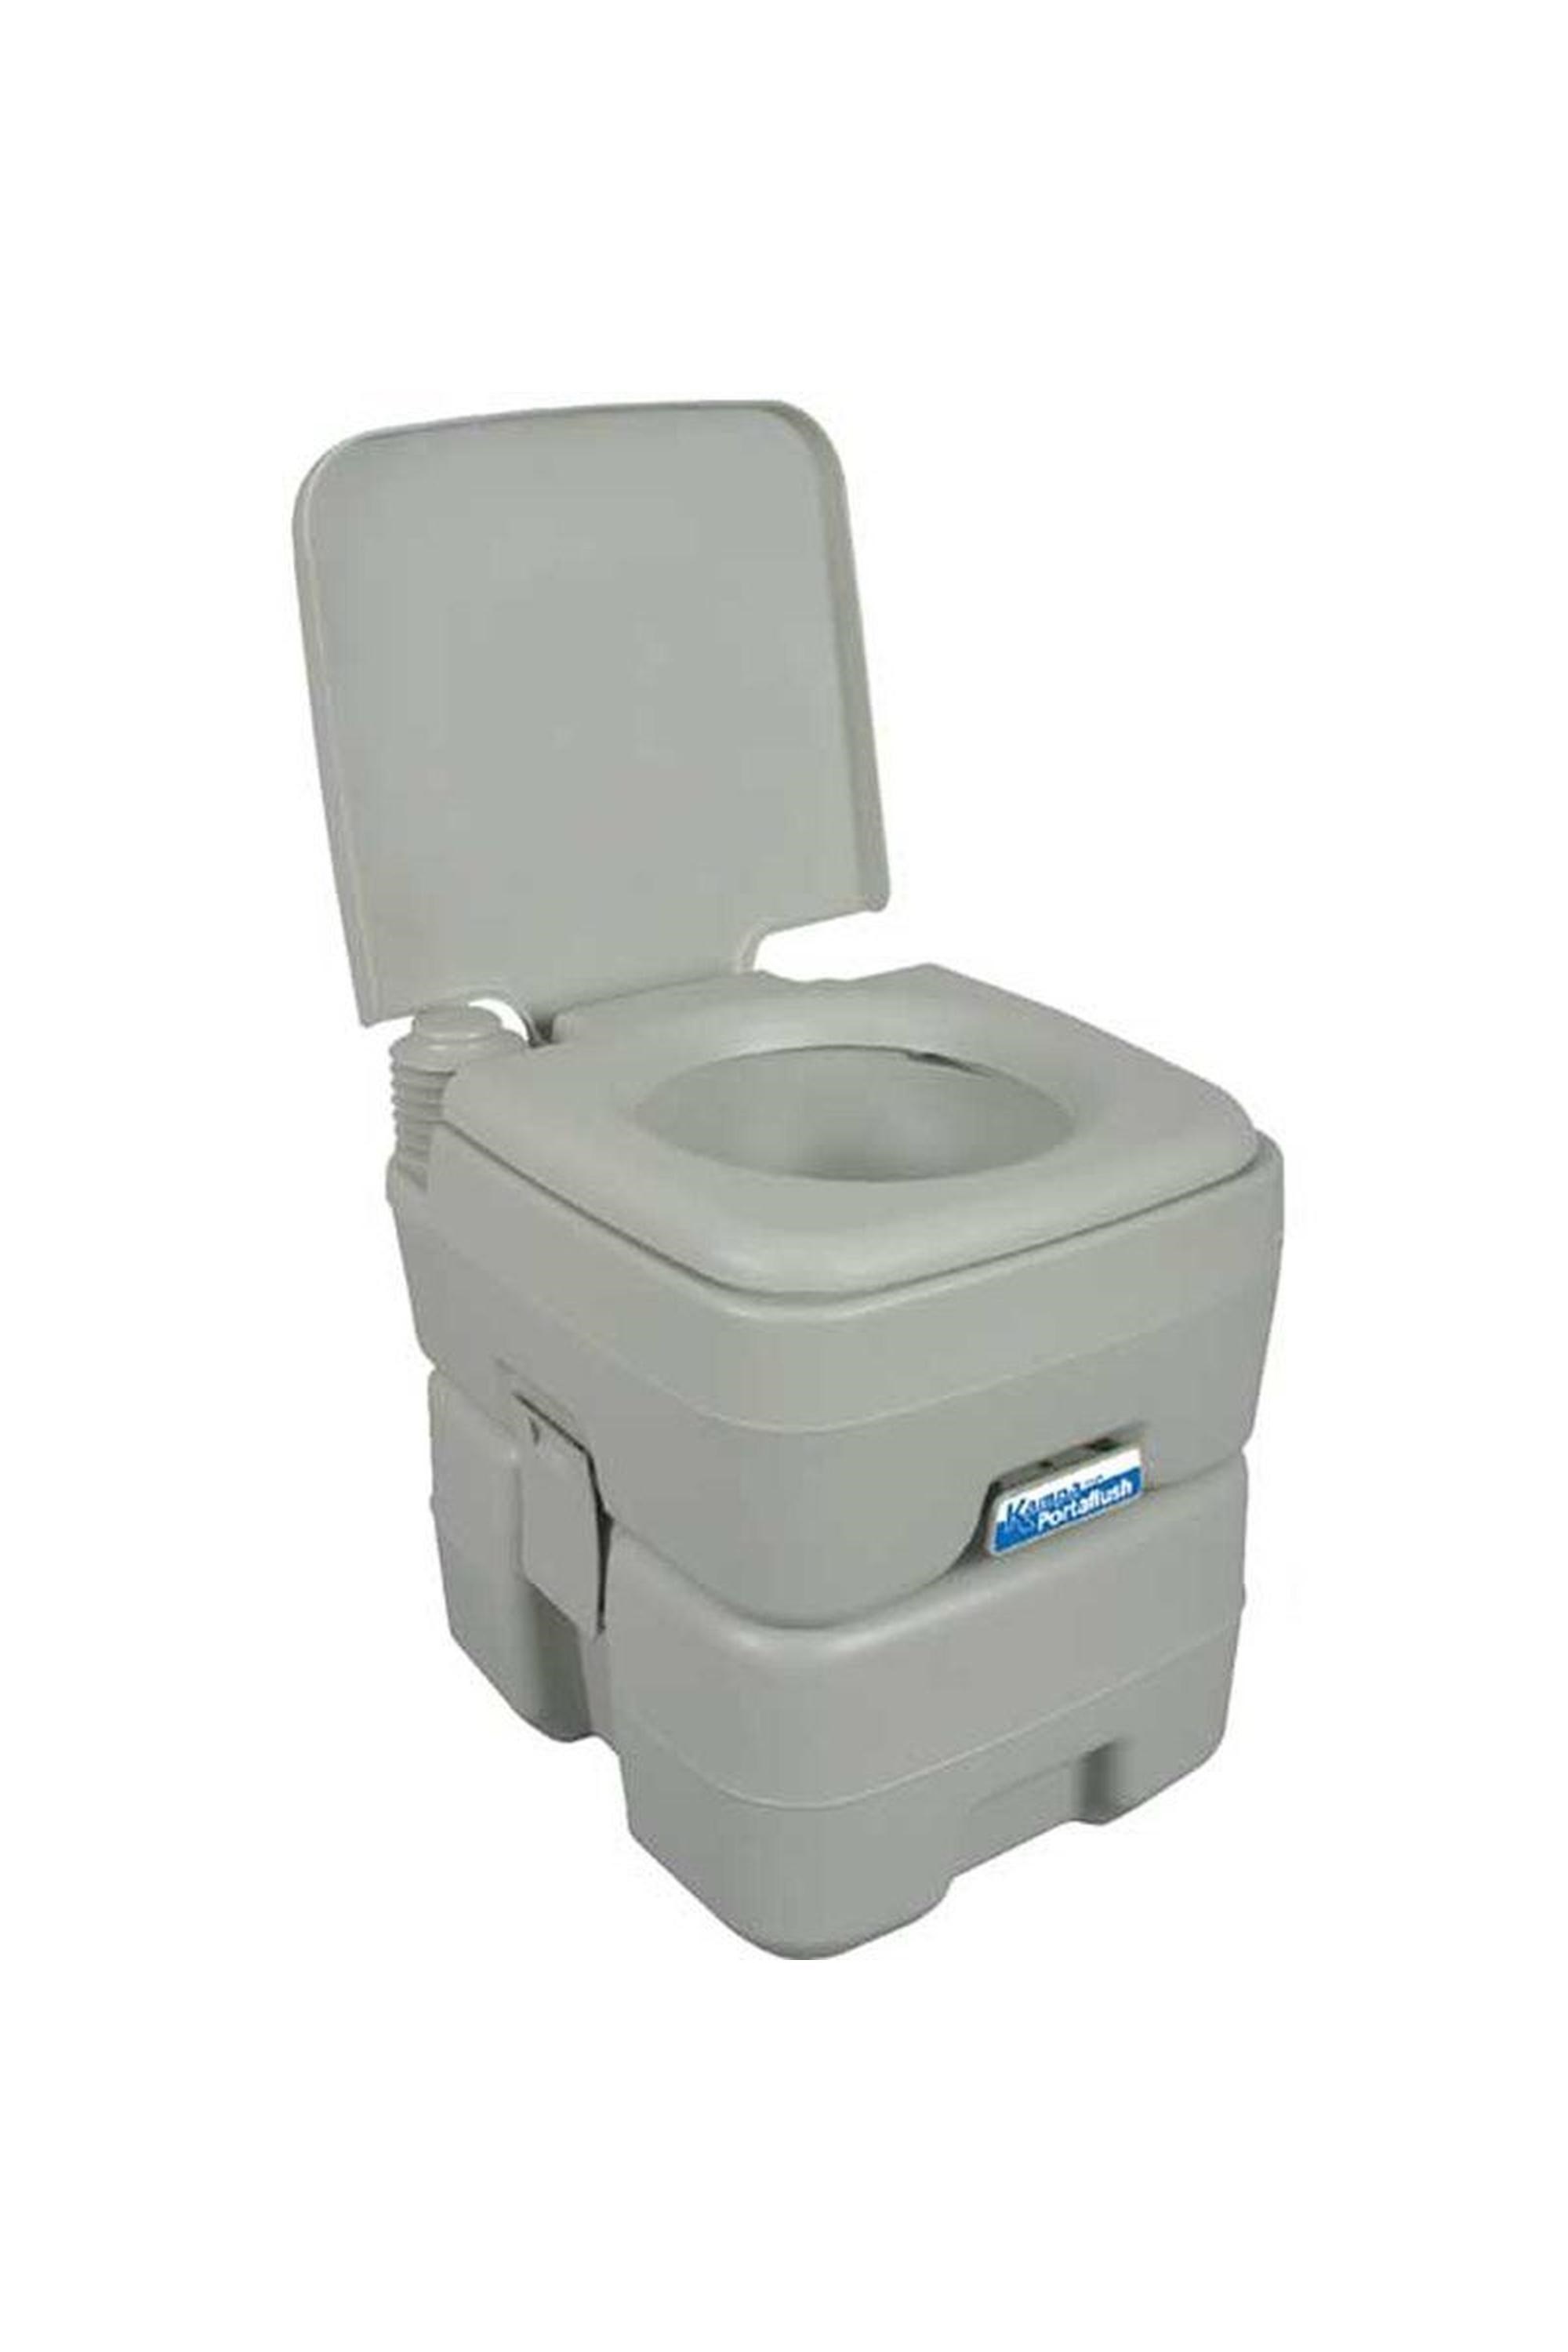 Portaflush 20l Chemical Toilet -